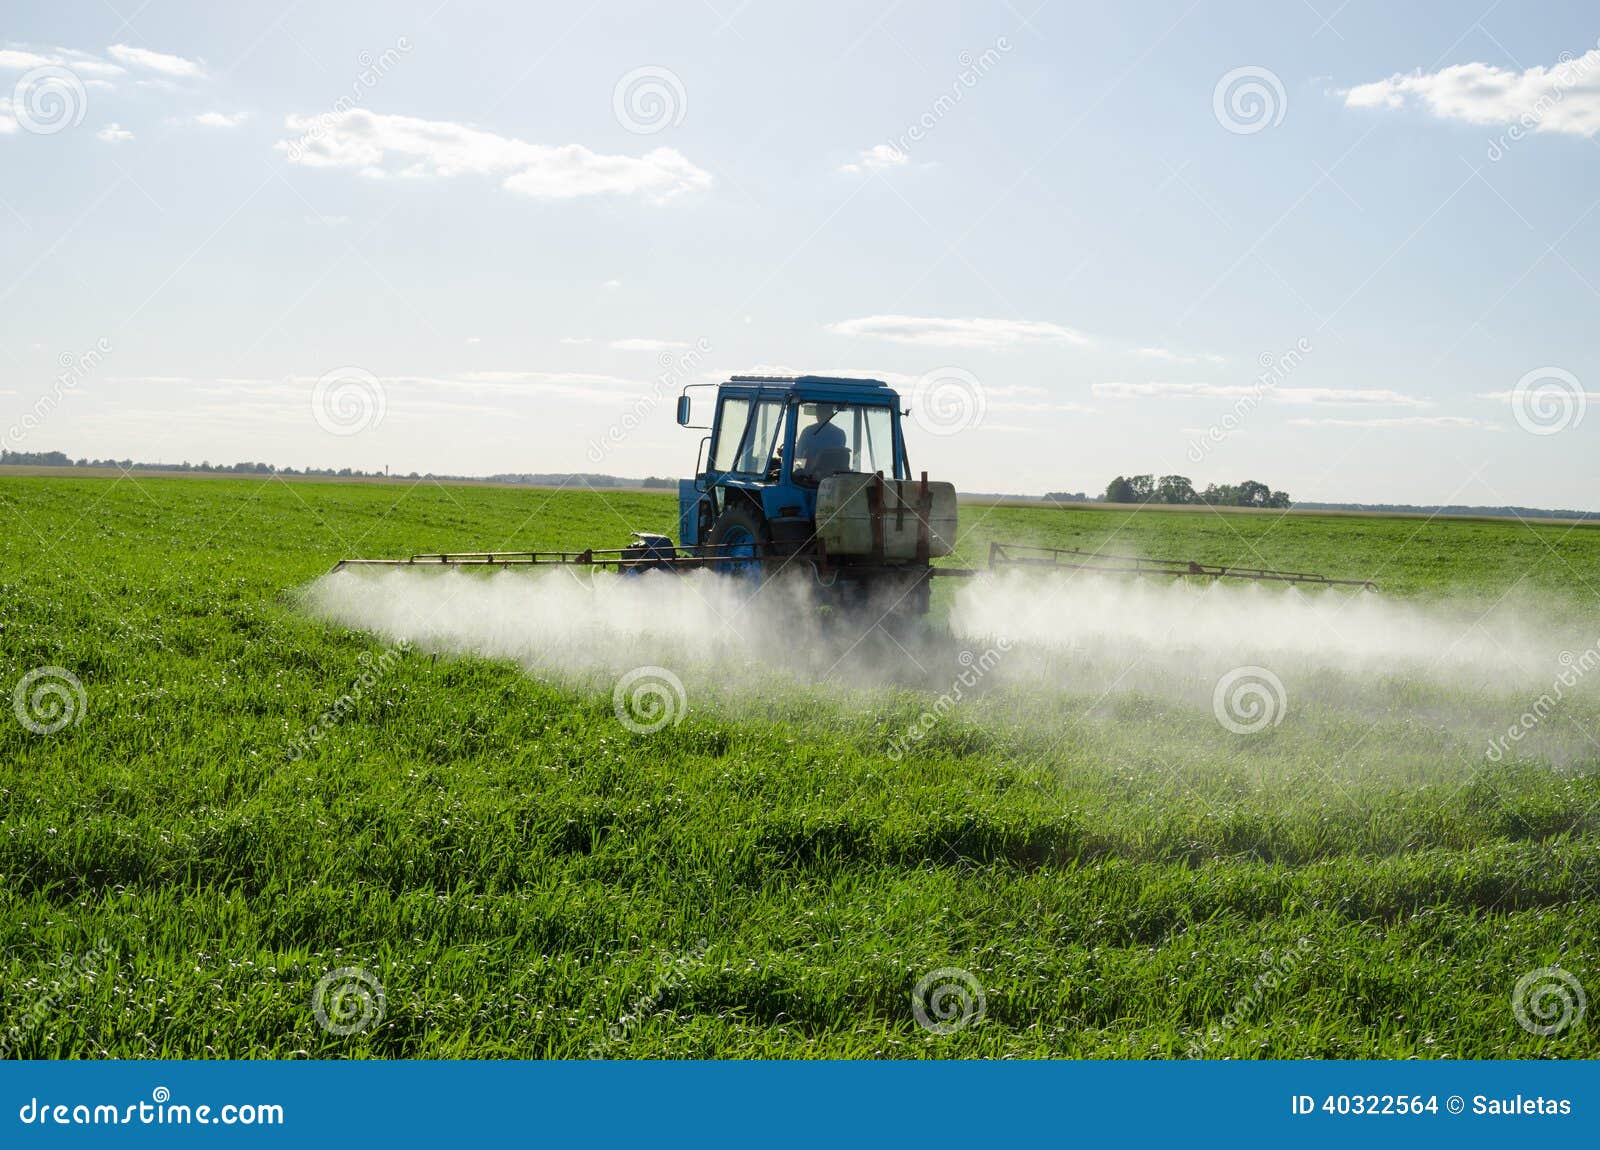 tractor spray fertilize field pesticide chemical